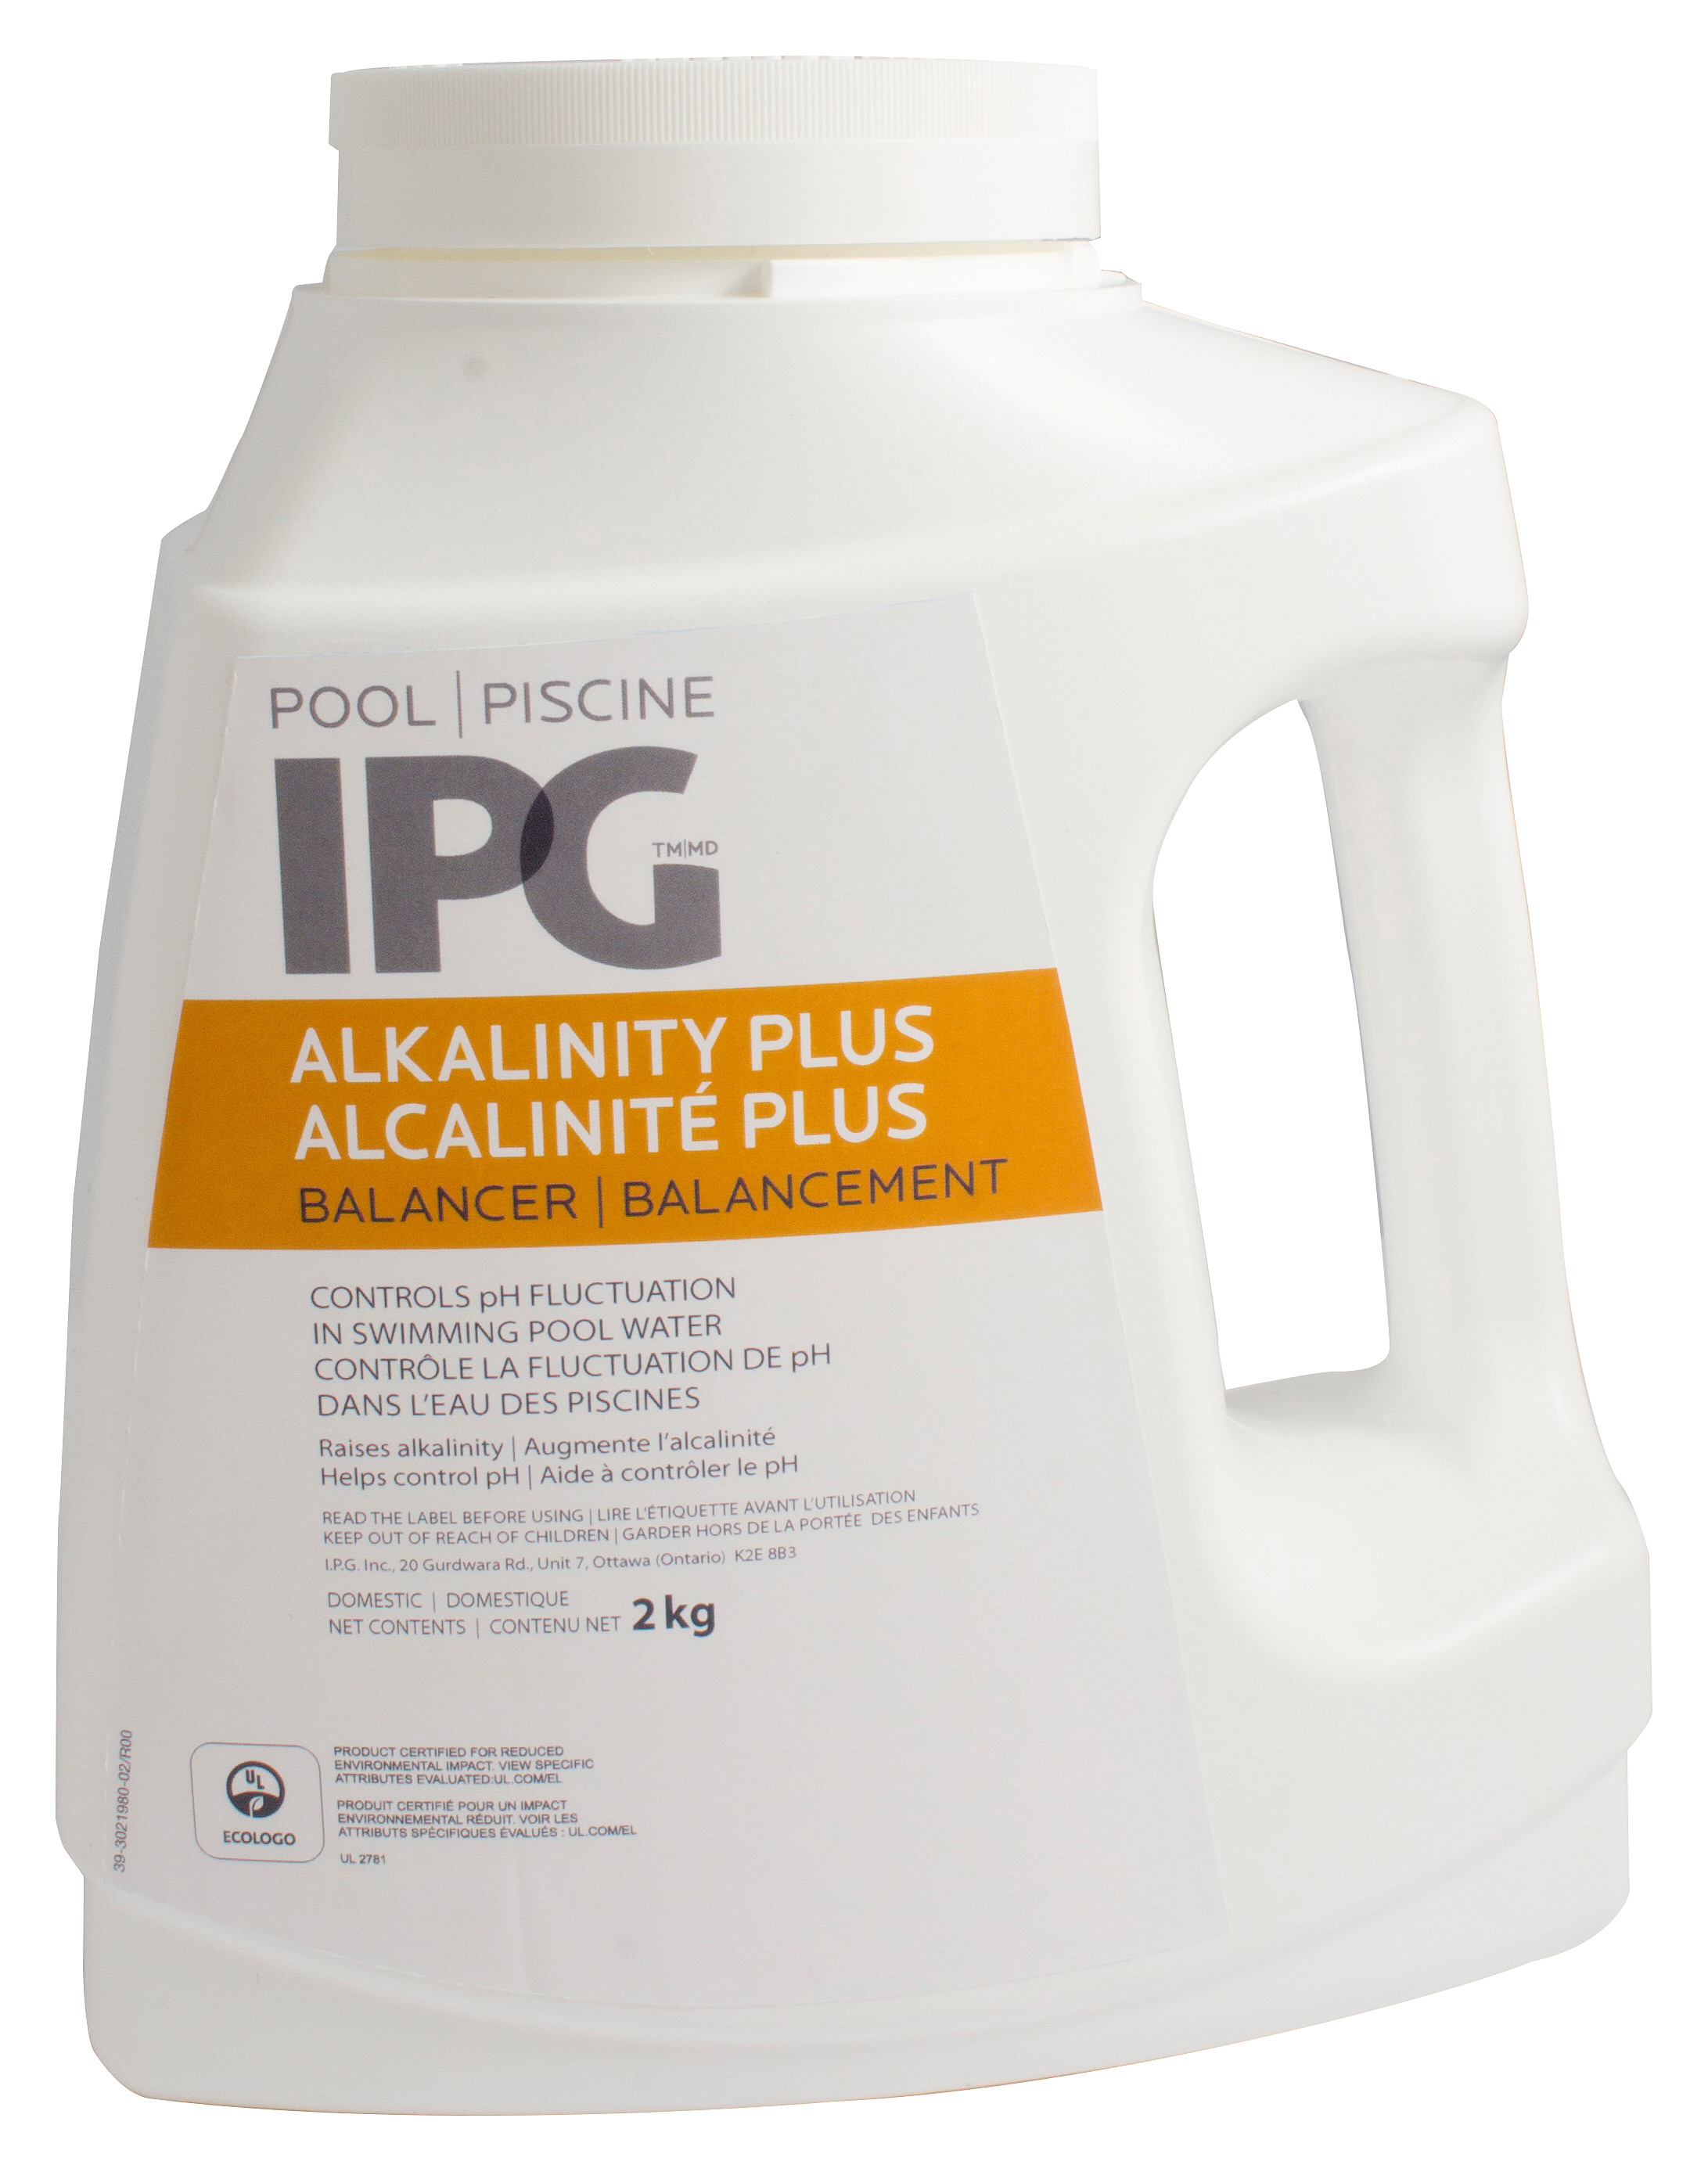 IPG Alkalinity Plus swimming pool water balancer